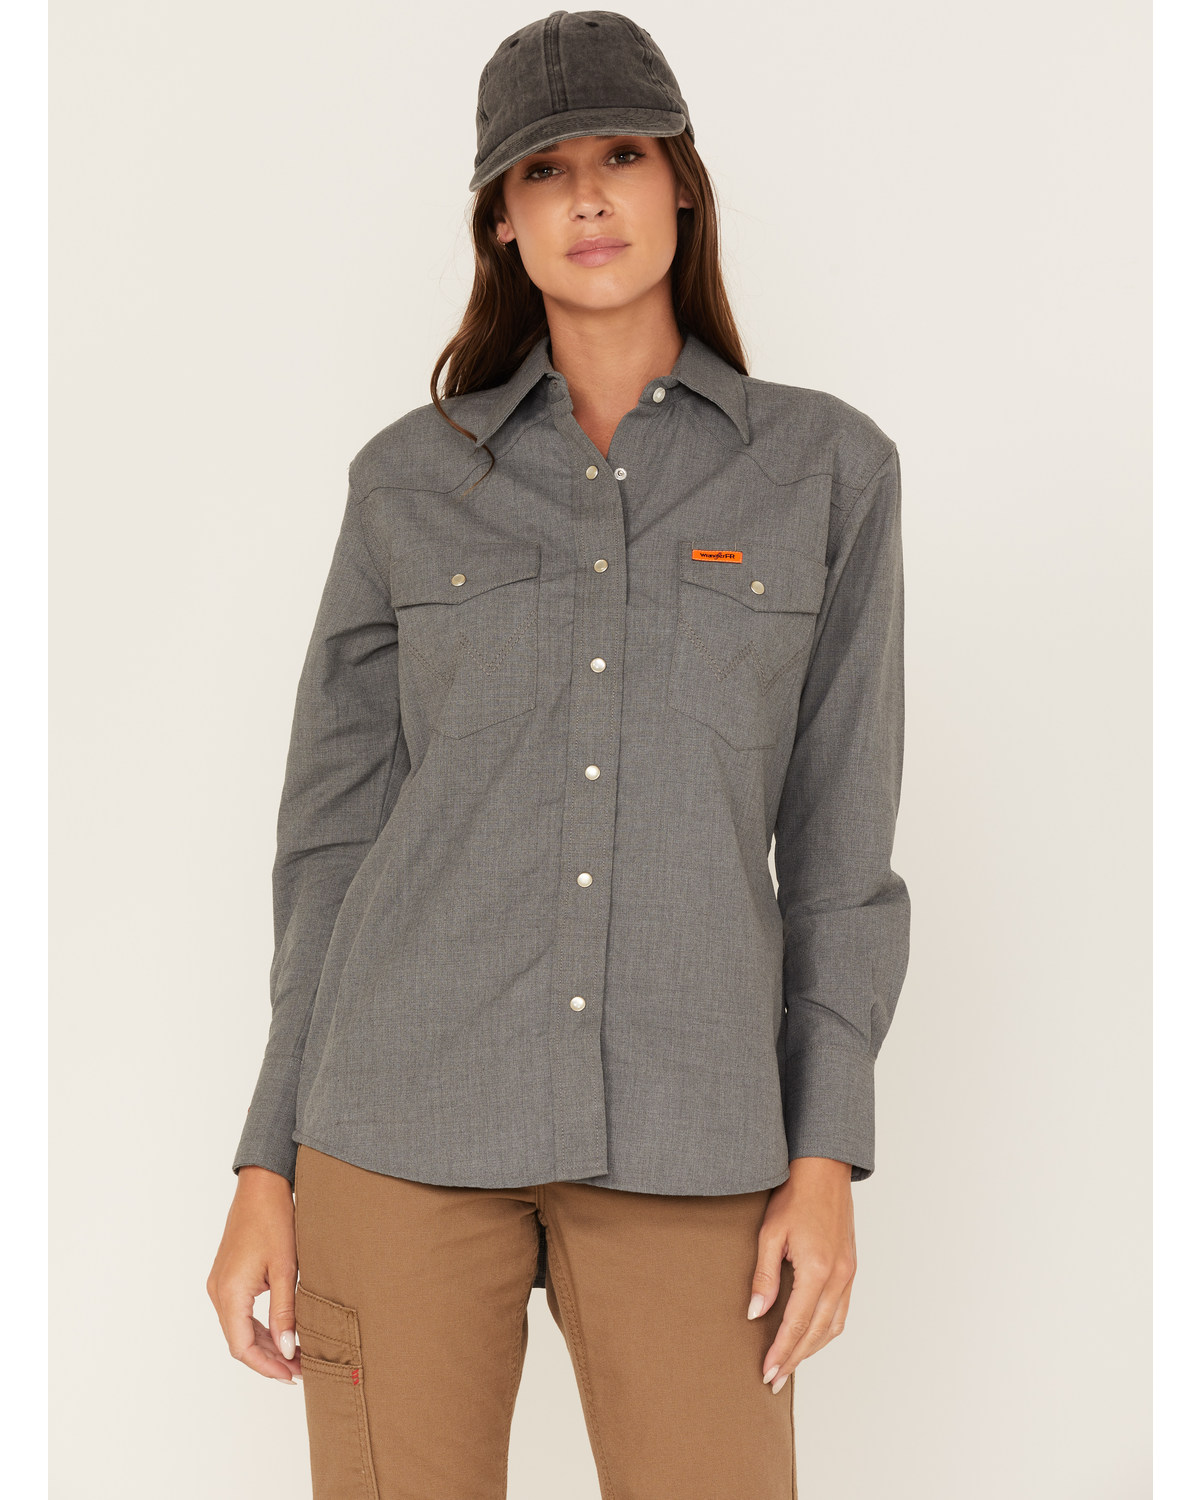 Wrangler Women's FR Long Sleeve Pearl Snap Western Work Shirt